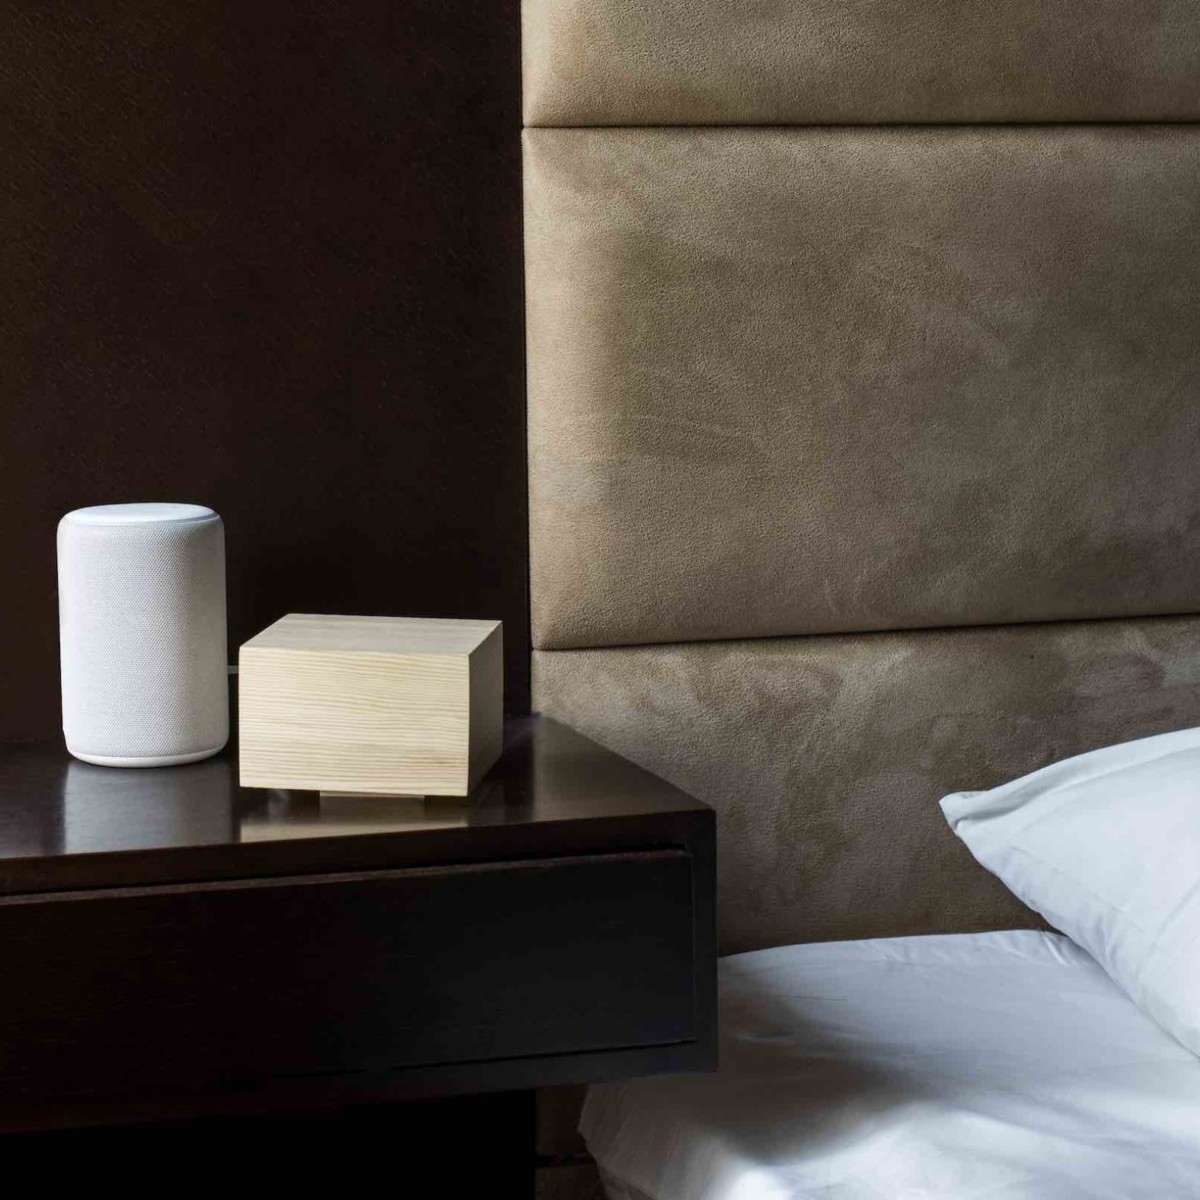 zLight Smart Lighting Sleep System creates the perfect environment for sleep